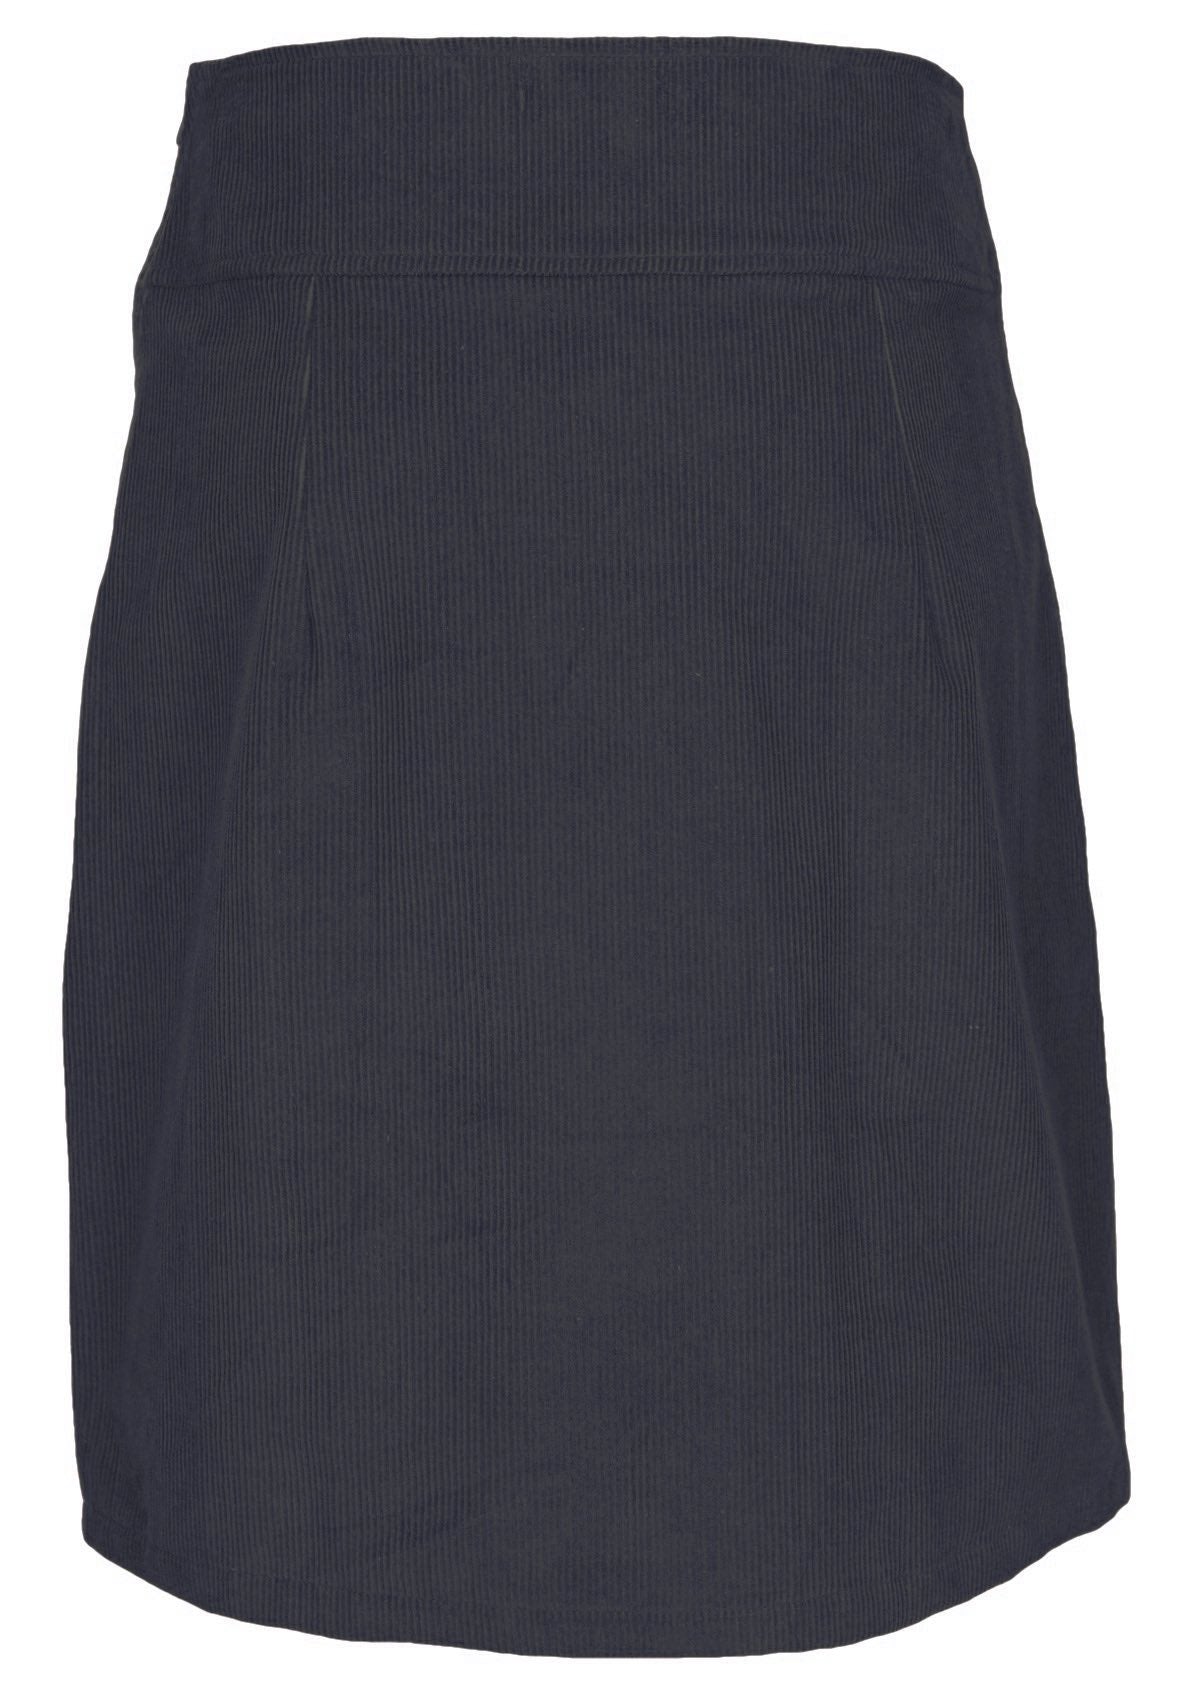 Mid length 100% cotton corduroy skirt features a hidden side zip. 